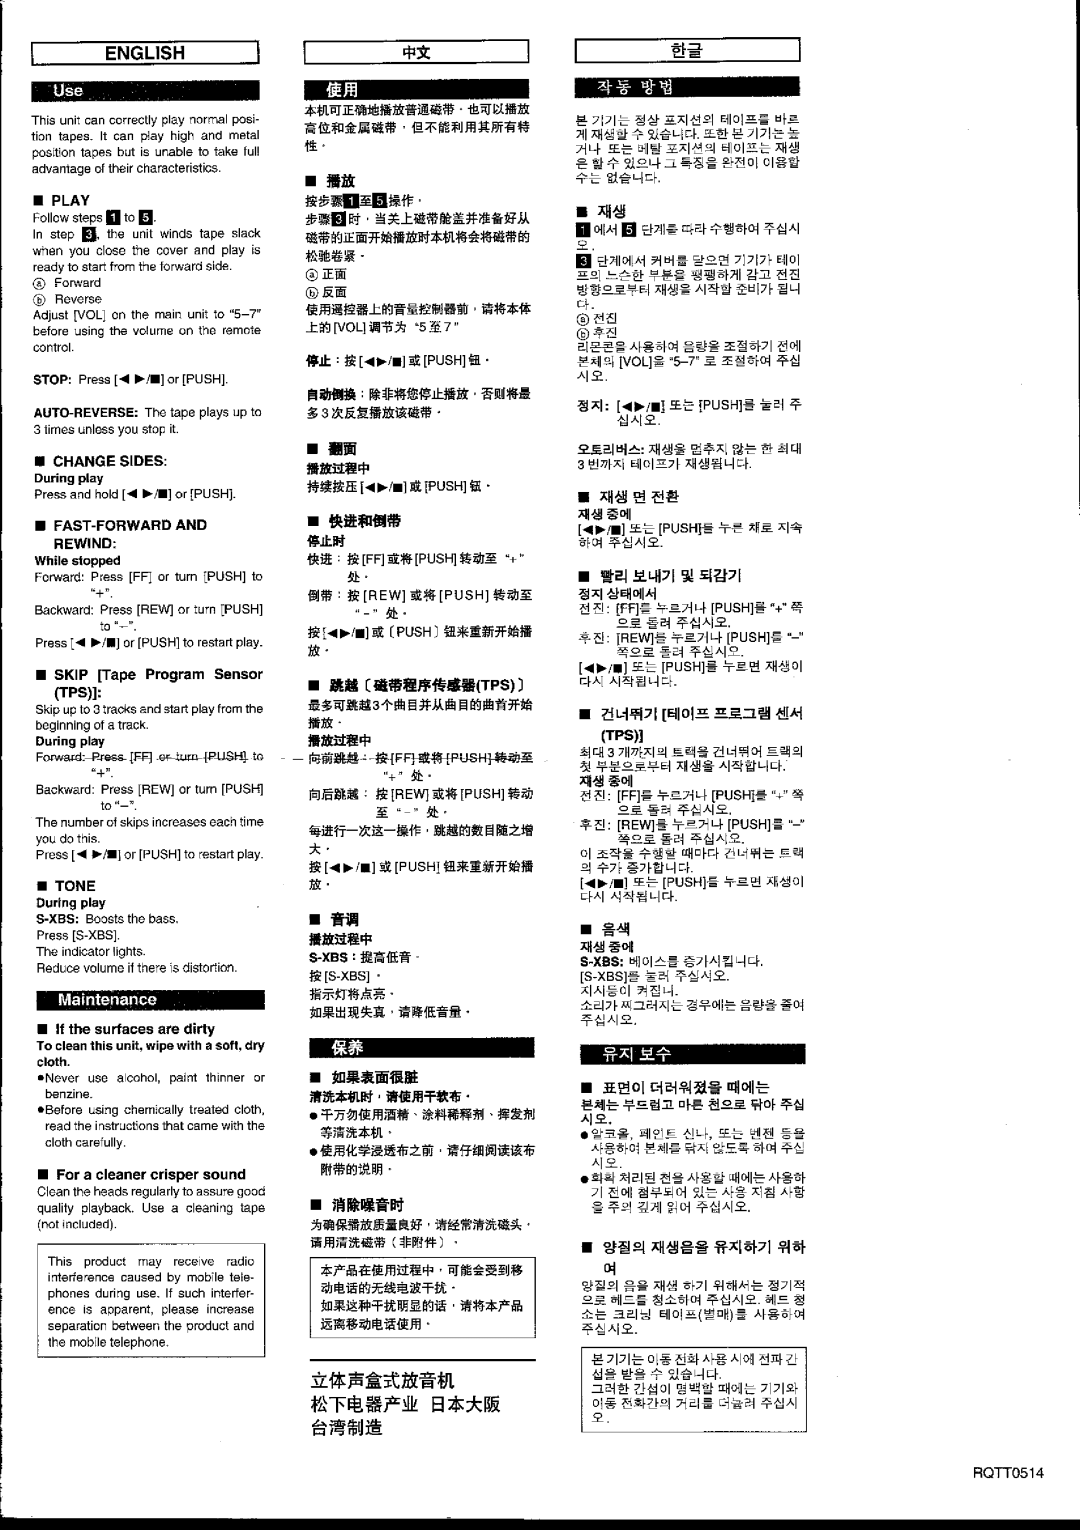 Panasonic RQ-SX56 manual 